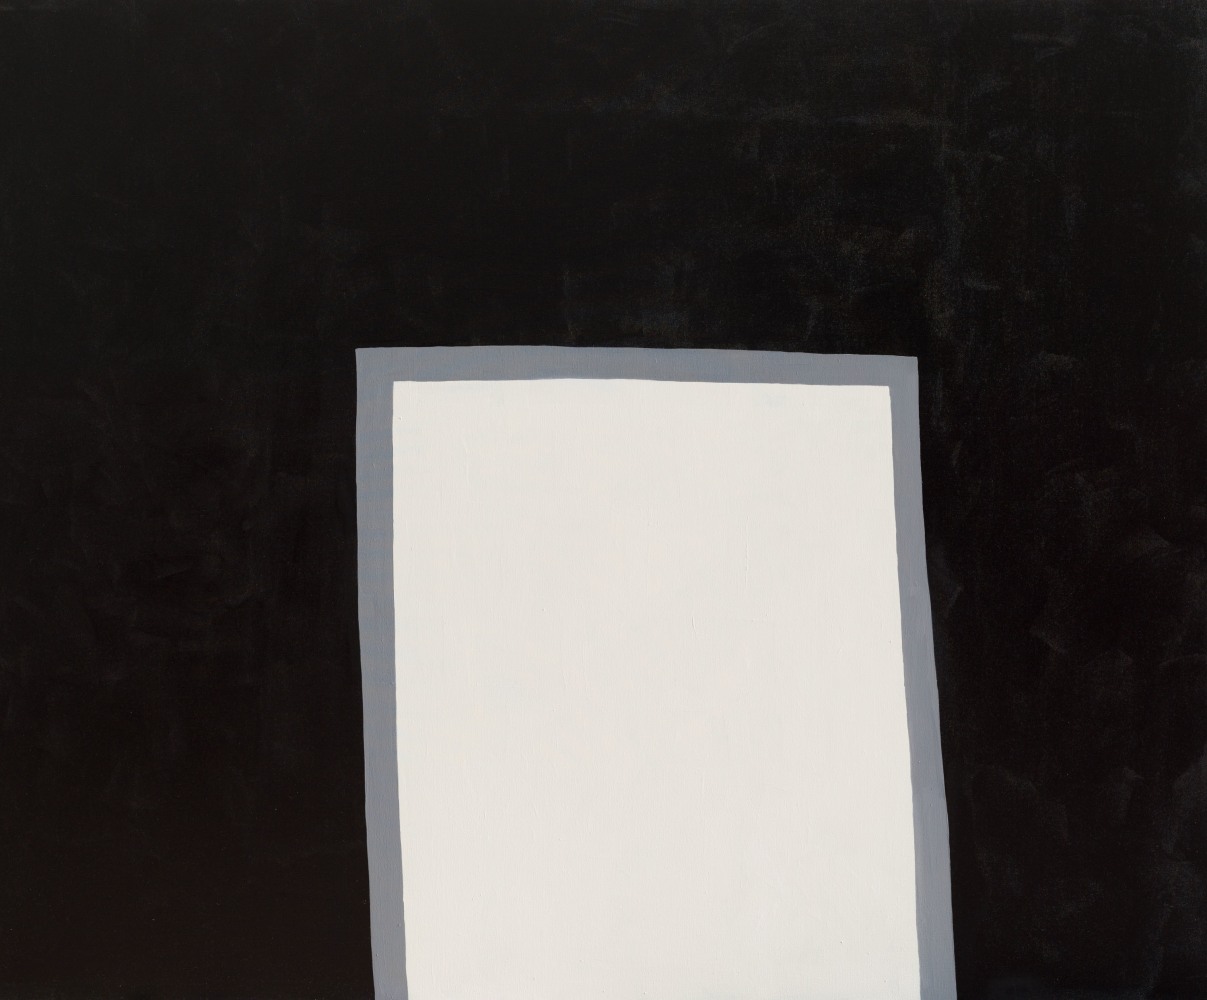 &amp;ldquo;Zuckerw&amp;uuml;rfel (Sugar Cube)&amp;rdquo;, 2022
Oil on canvas
65 x 78 3/4 inches
165 x 200 cm
SIM 89